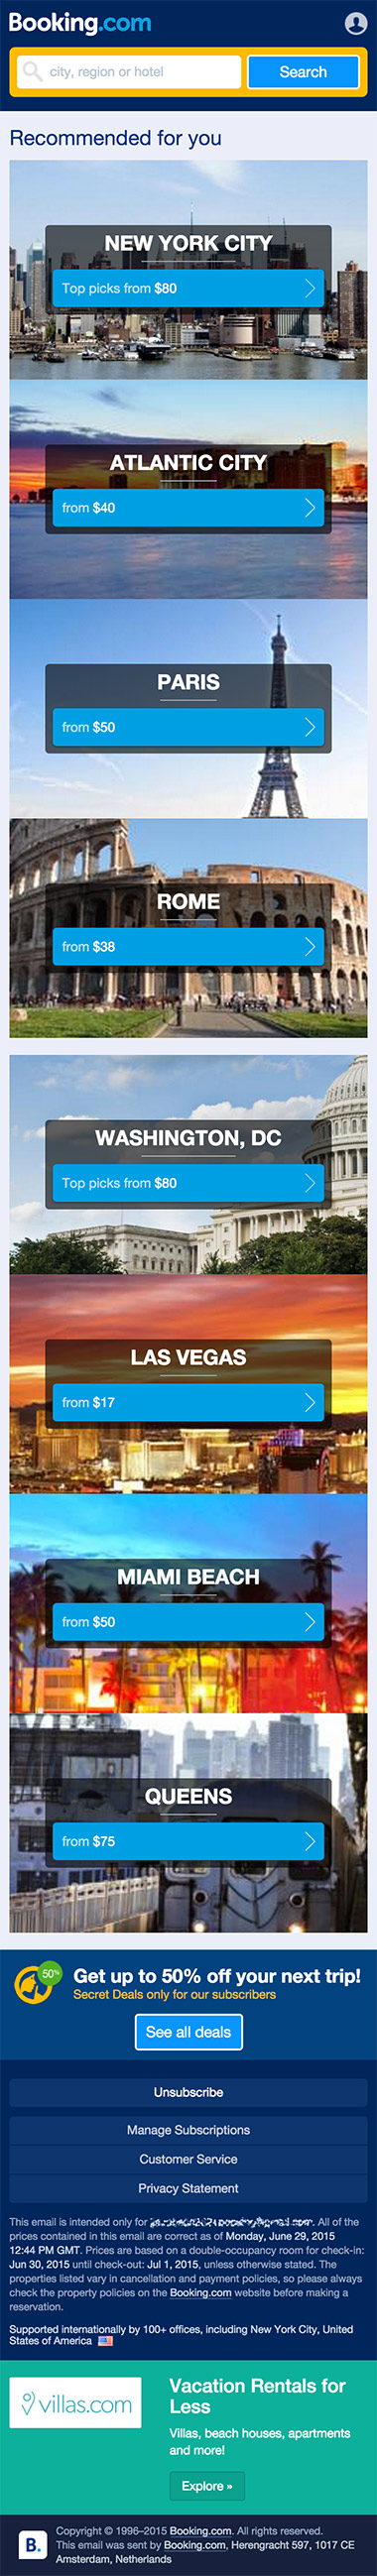 BookingCom hotel travel responsive email design